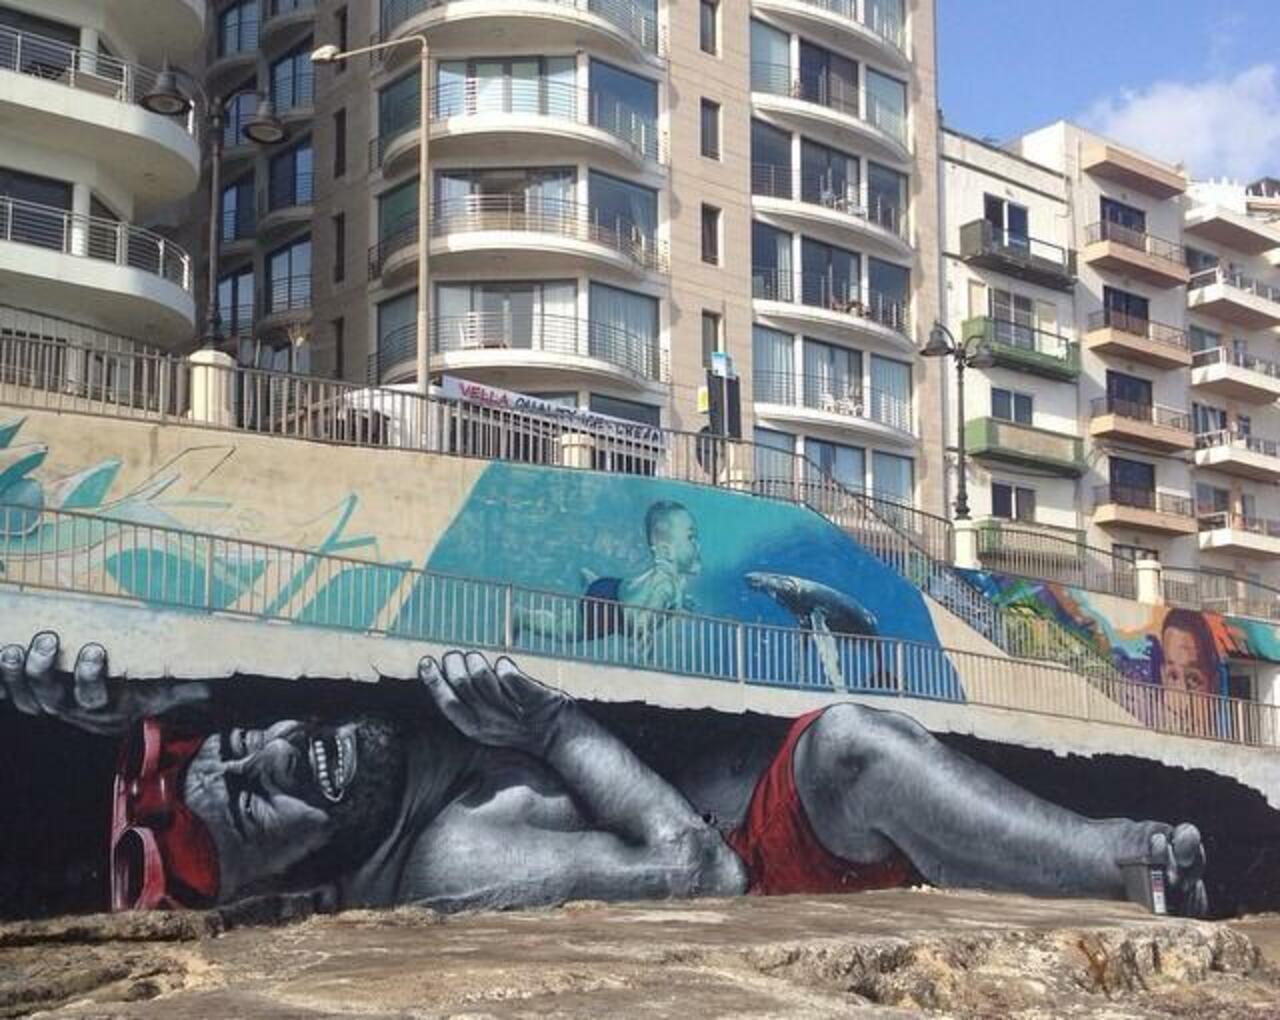 MT @GoogleStreetArt @MRAMarketing LOVE This Street Art in Sliema Malta! #MTO  #art #graffiti #mural #streetart http://t.co/KTmuFhgj57